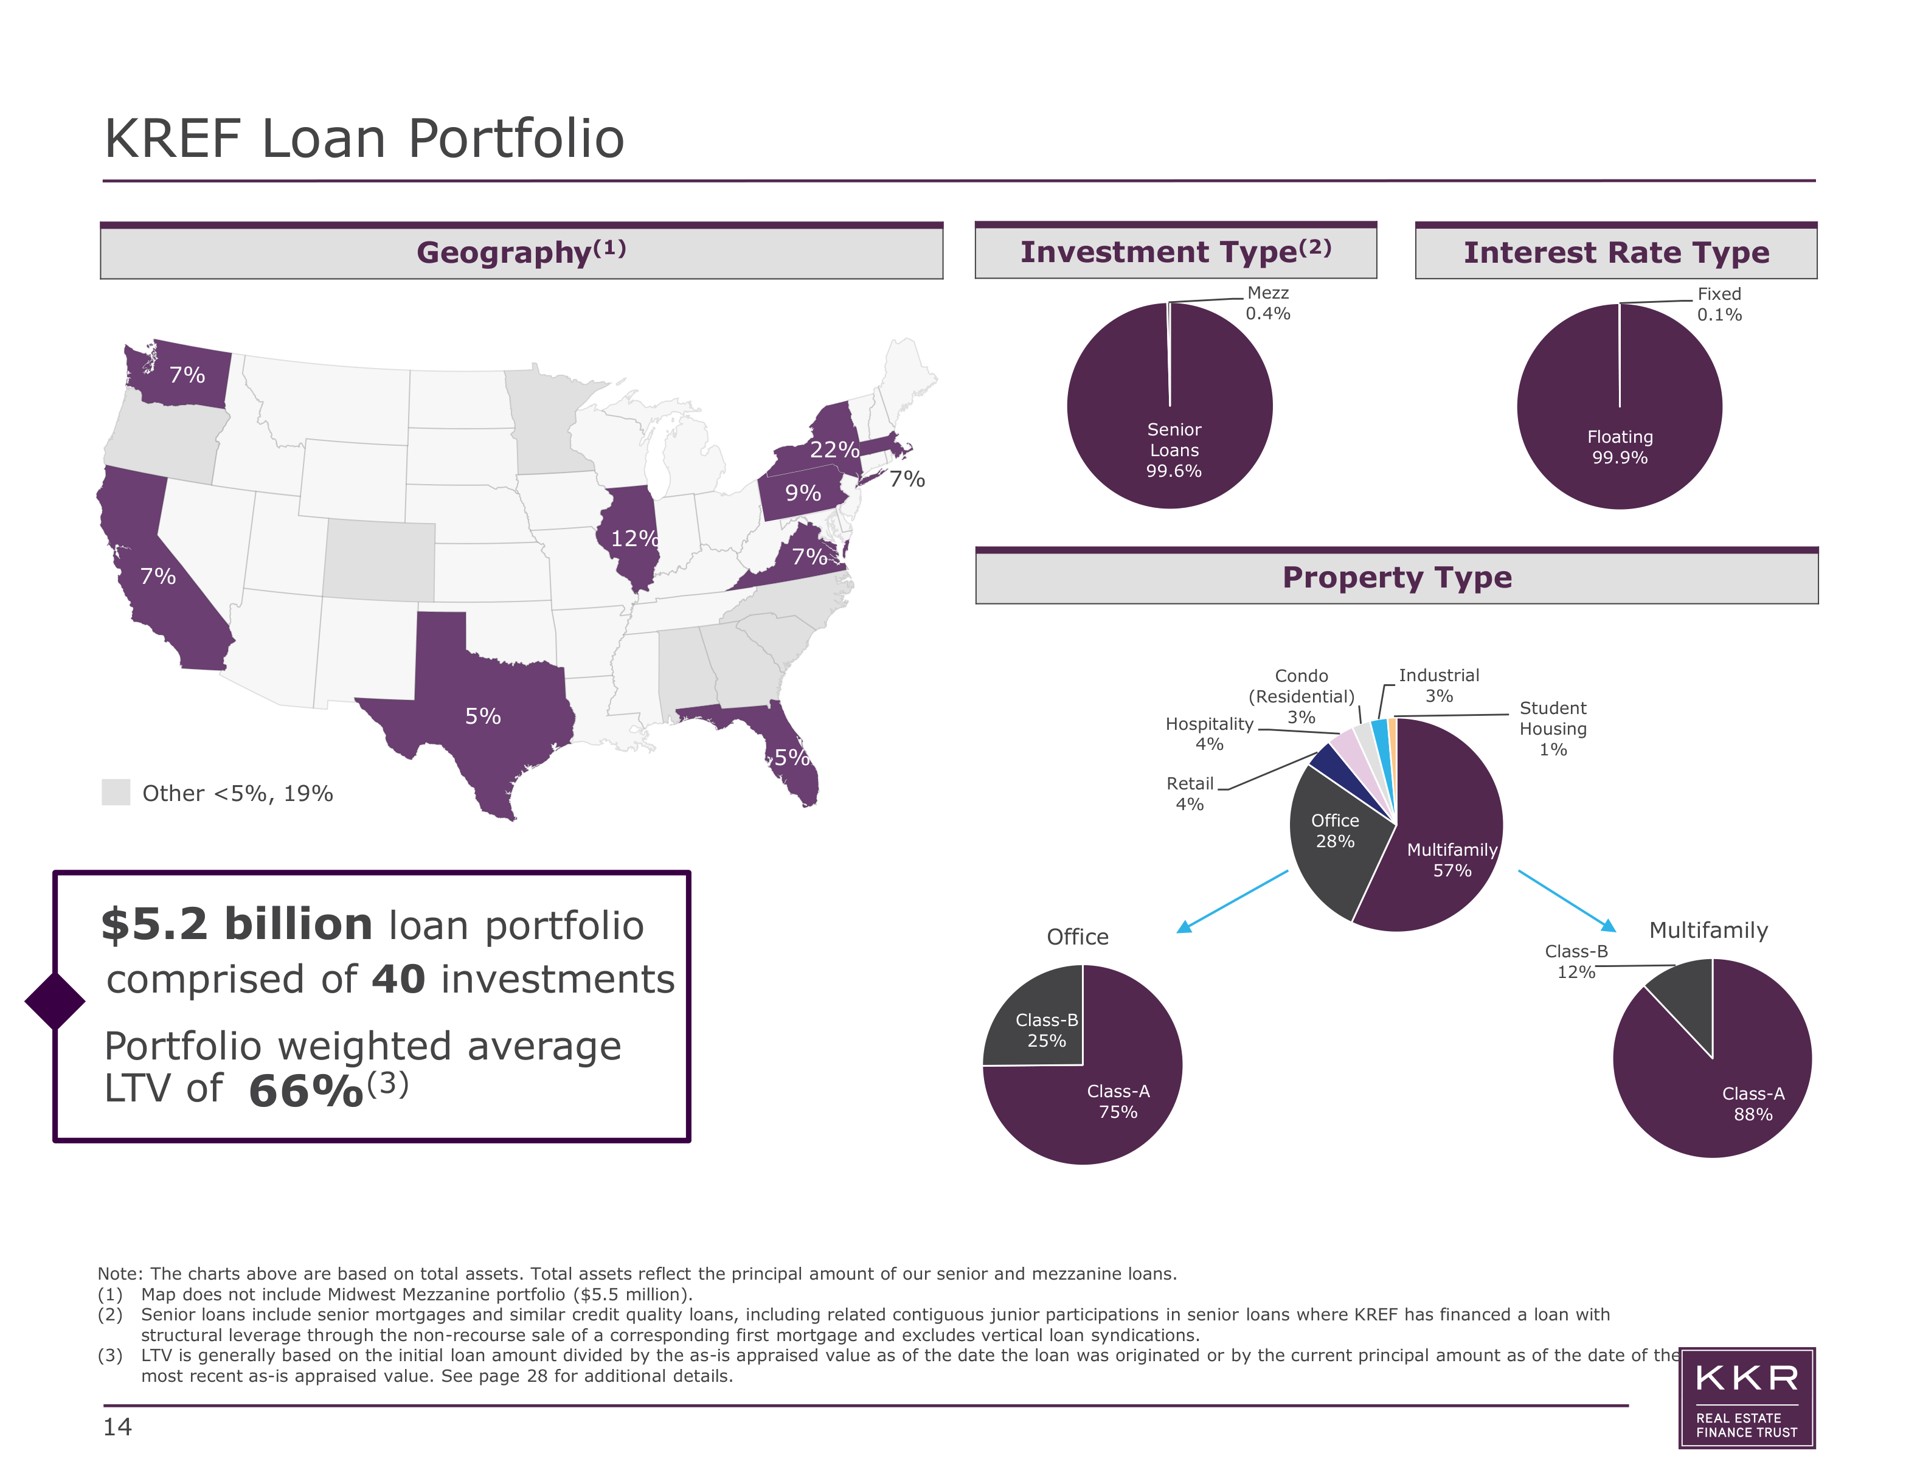 loan portfolio billion comprised of investments loan portfolio portfolio weighted average of geography investment type interest rate type | KKR Real Estate Finance Trust